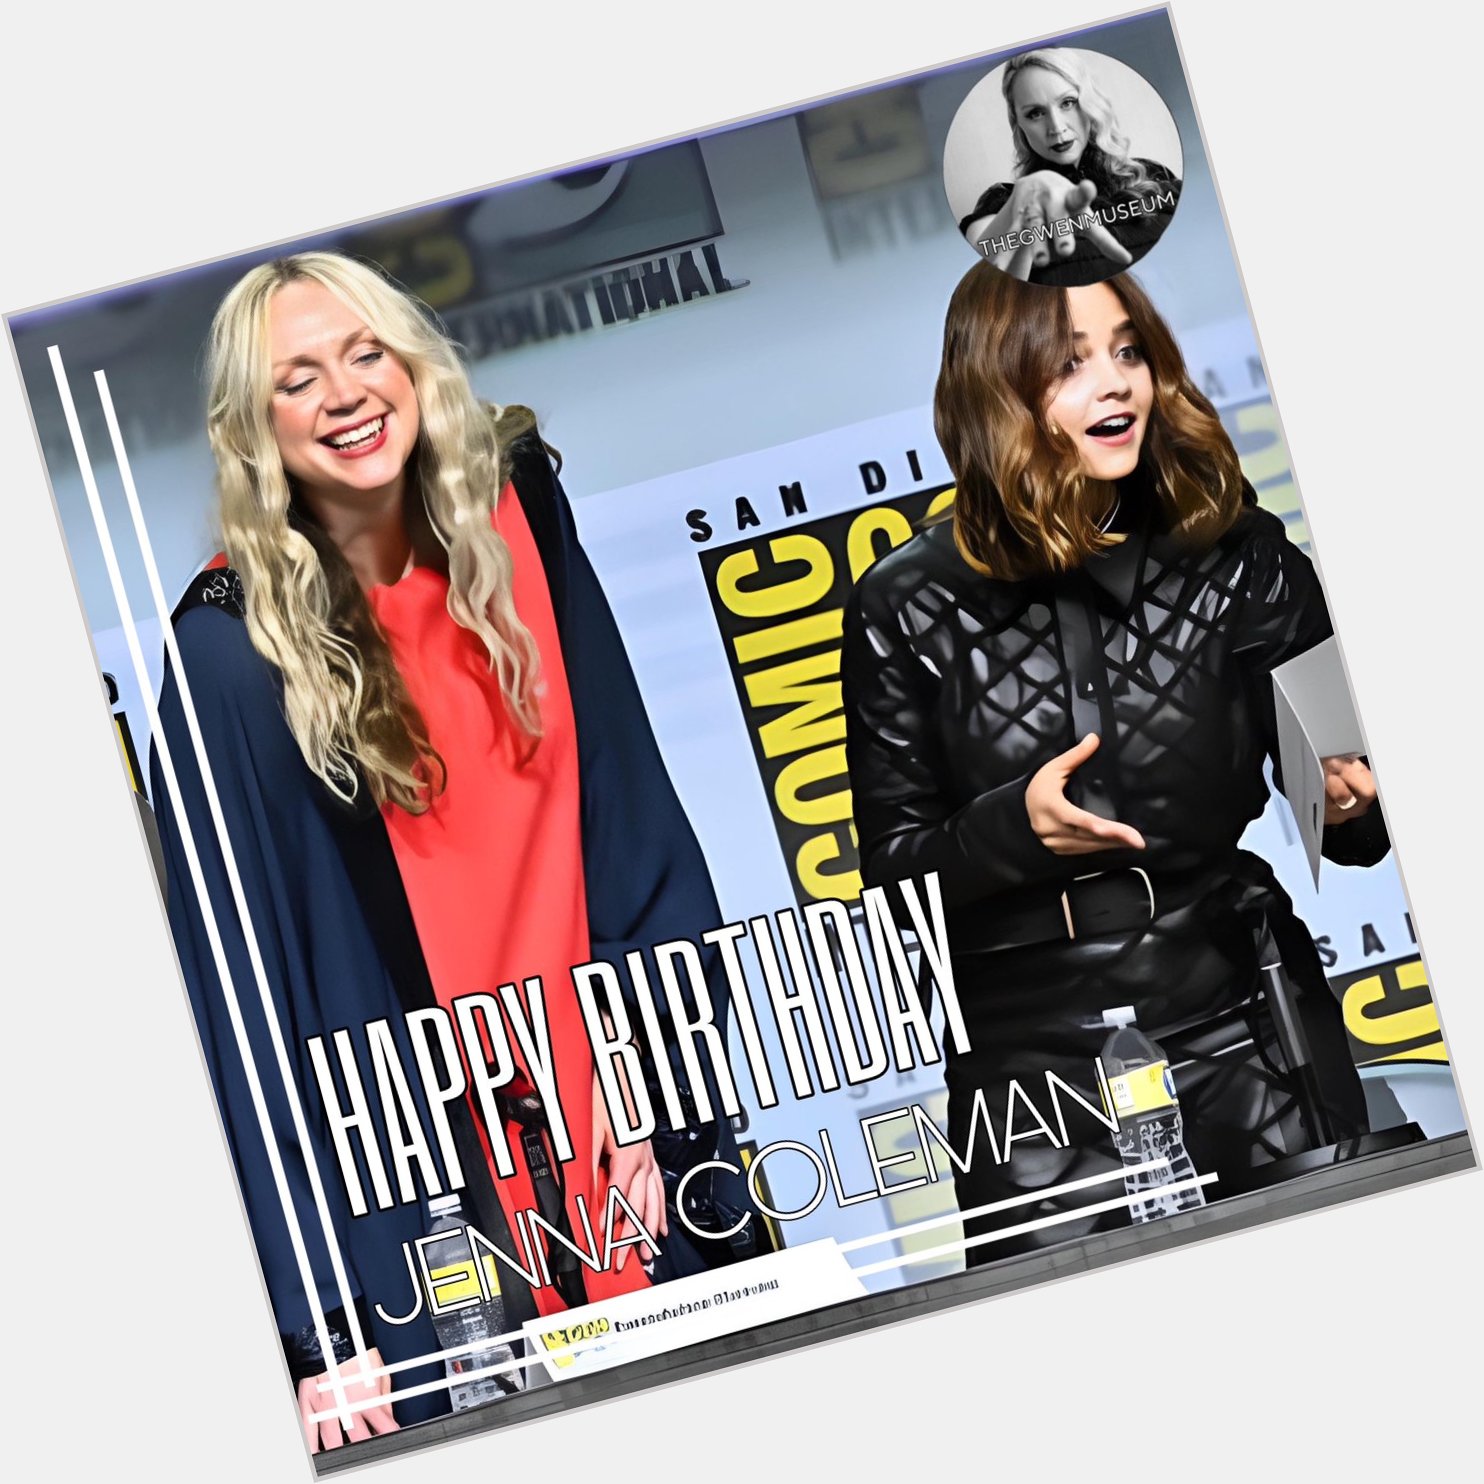 Happy birthday to Gwen s fabulous Sandman co-star, Jenna Coleman! 